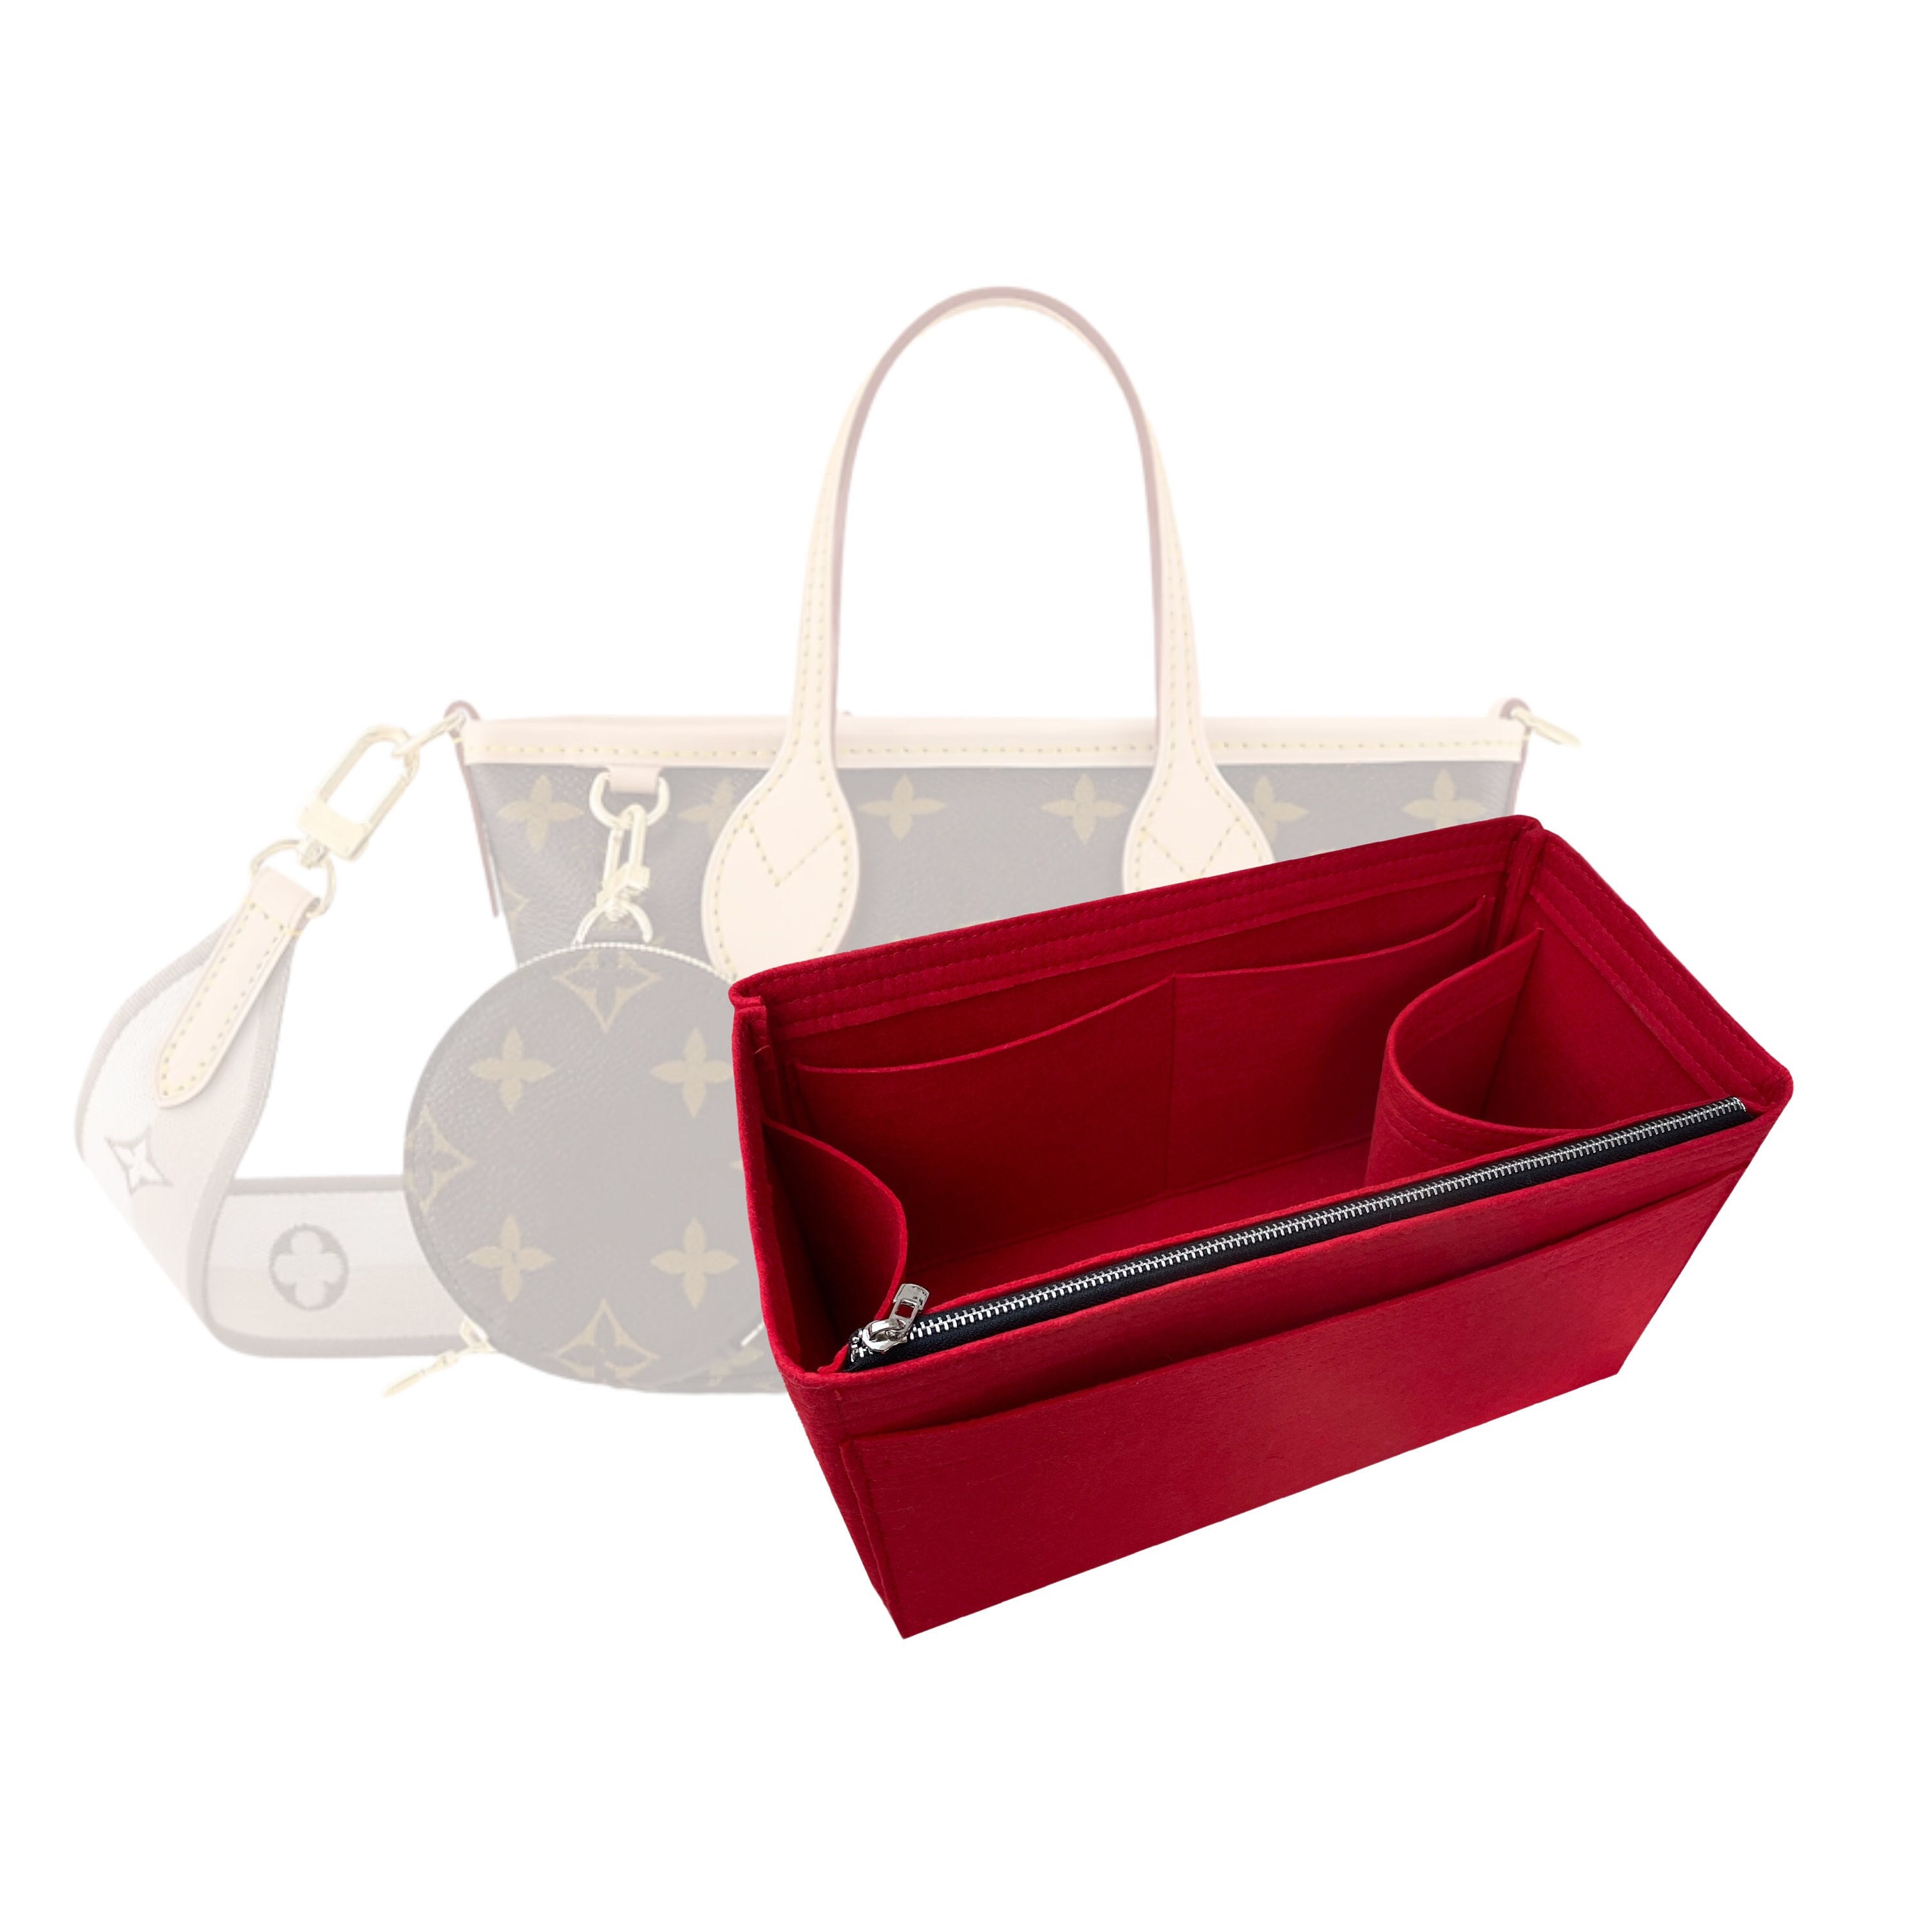 WUTA Bag Strap For LV Neverfull Handle Straps Handbag Crossbody